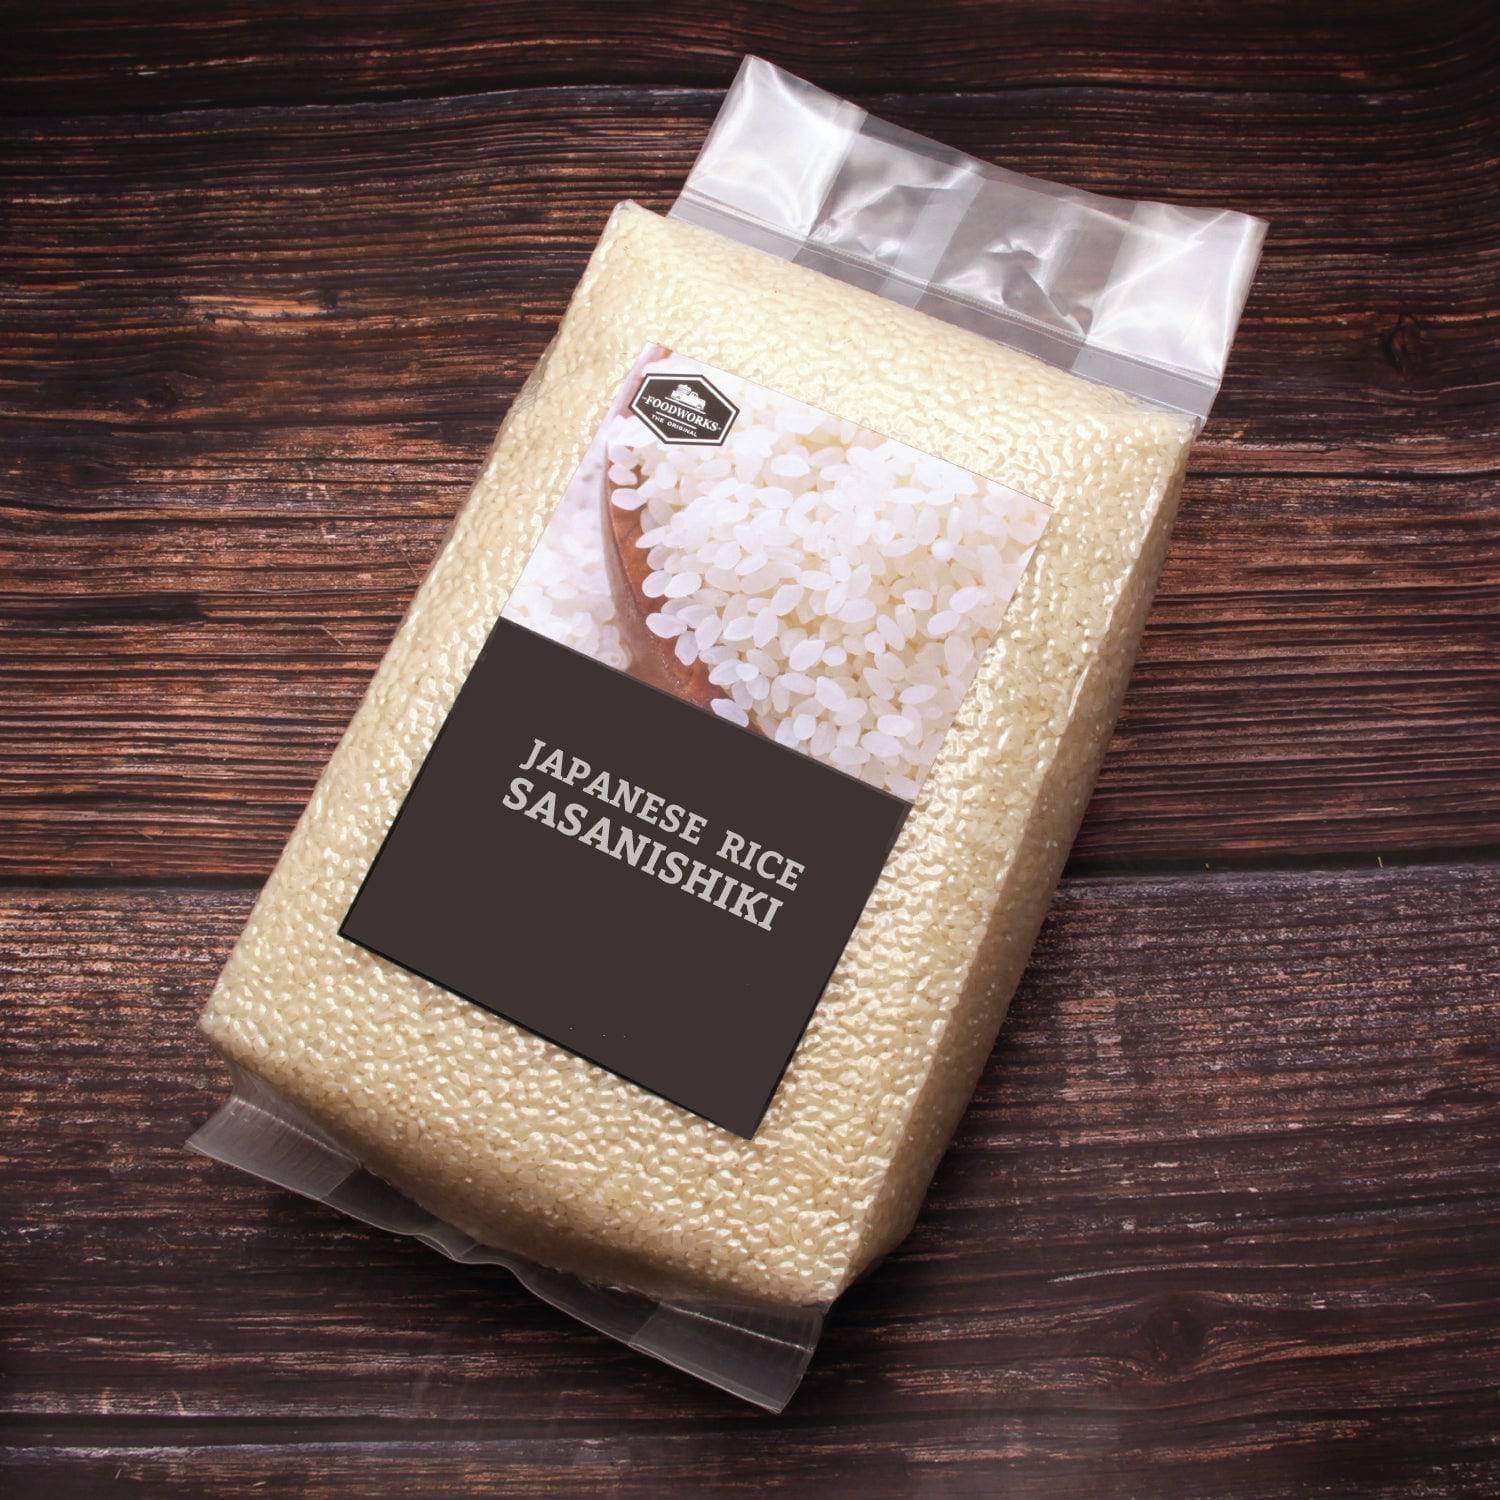 "Sasanishiki" Japanese Rice ข้าวสารญี่ปุ่น สายพันธุ์ซาซานิชิกิ - The Foodworks 